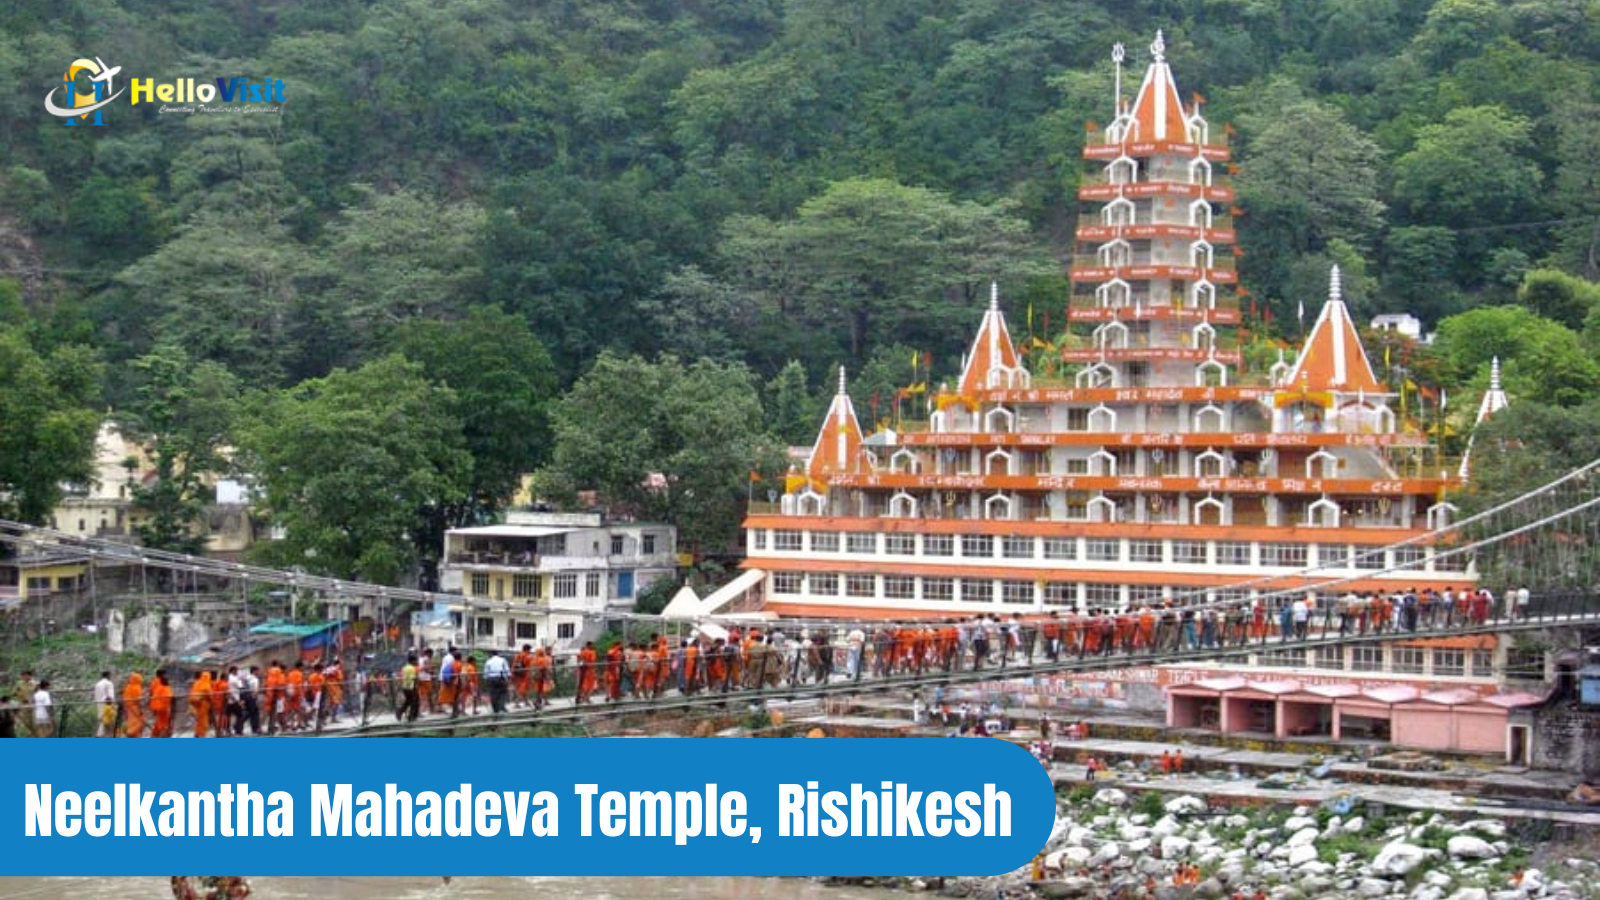 Neelkantha Mahadeva Temple, Rishikesh